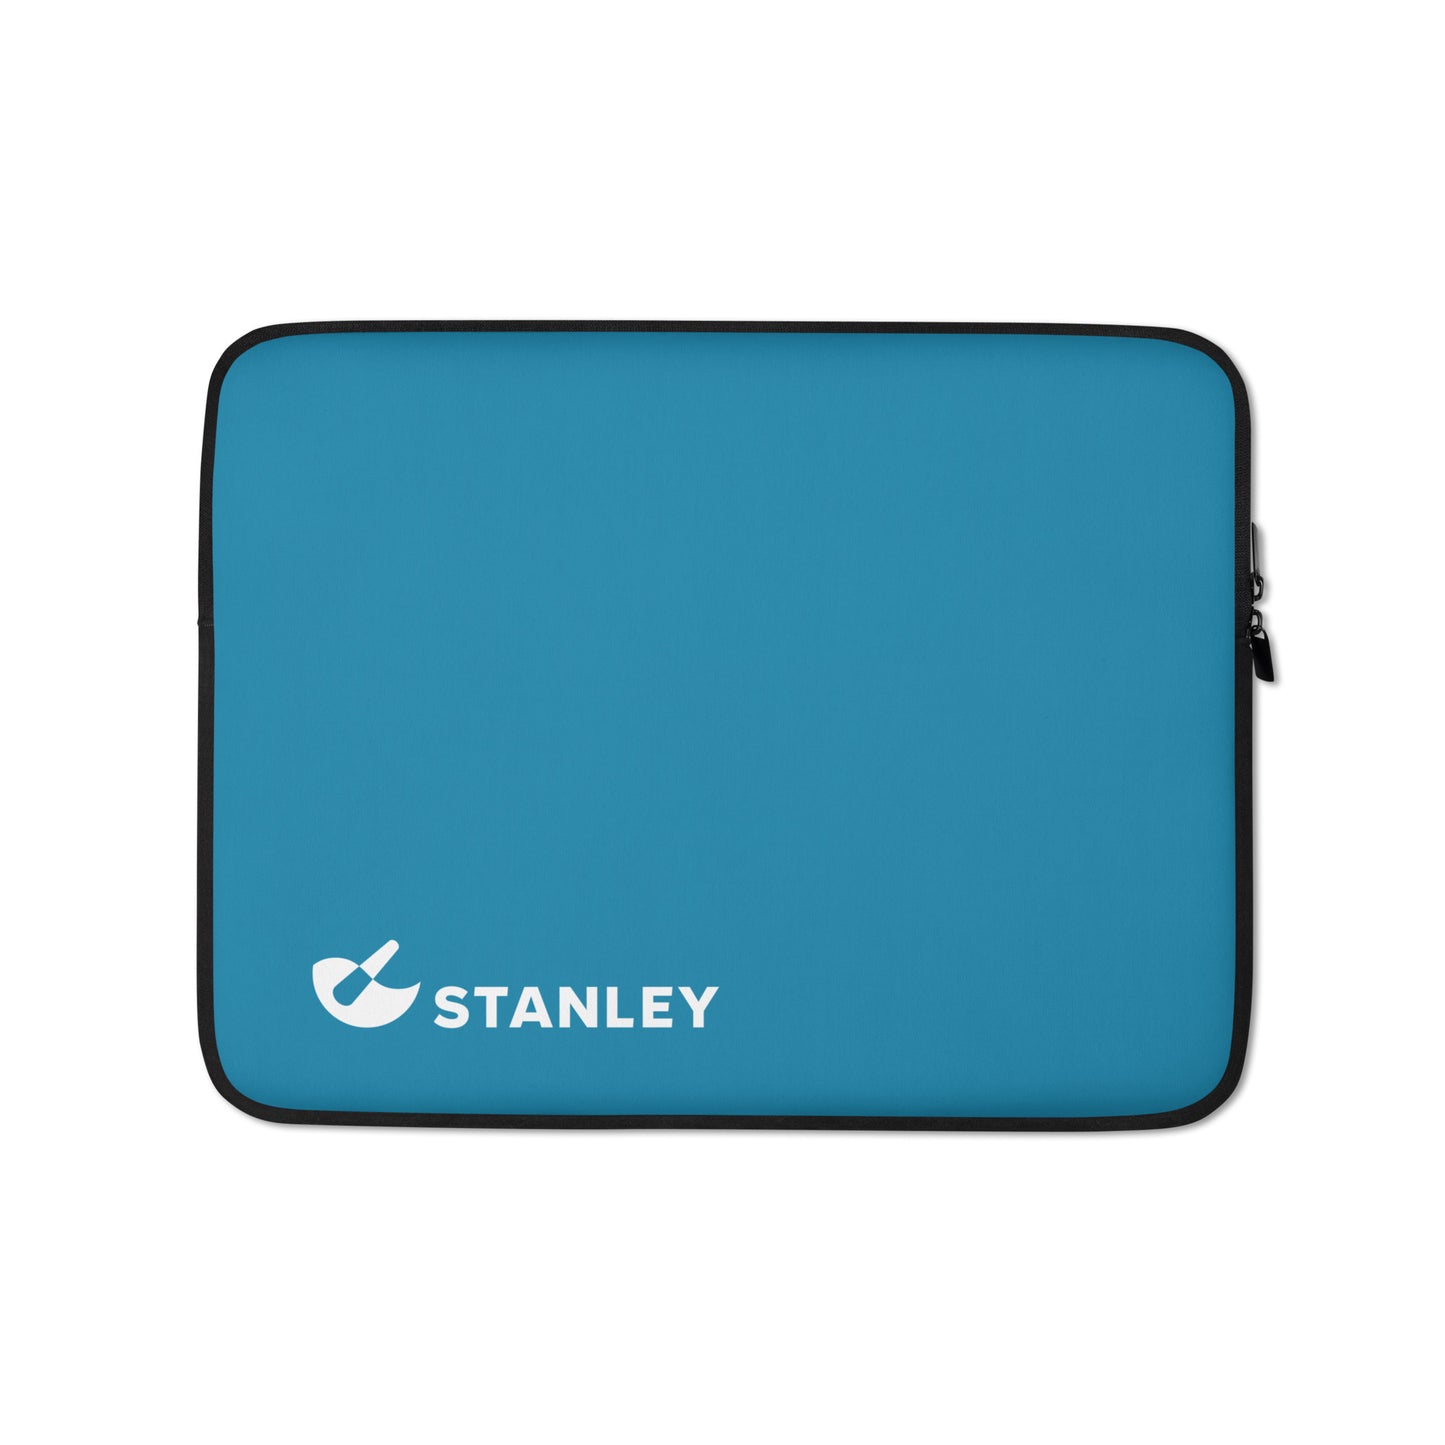 Laptop Sleeve - Stanley